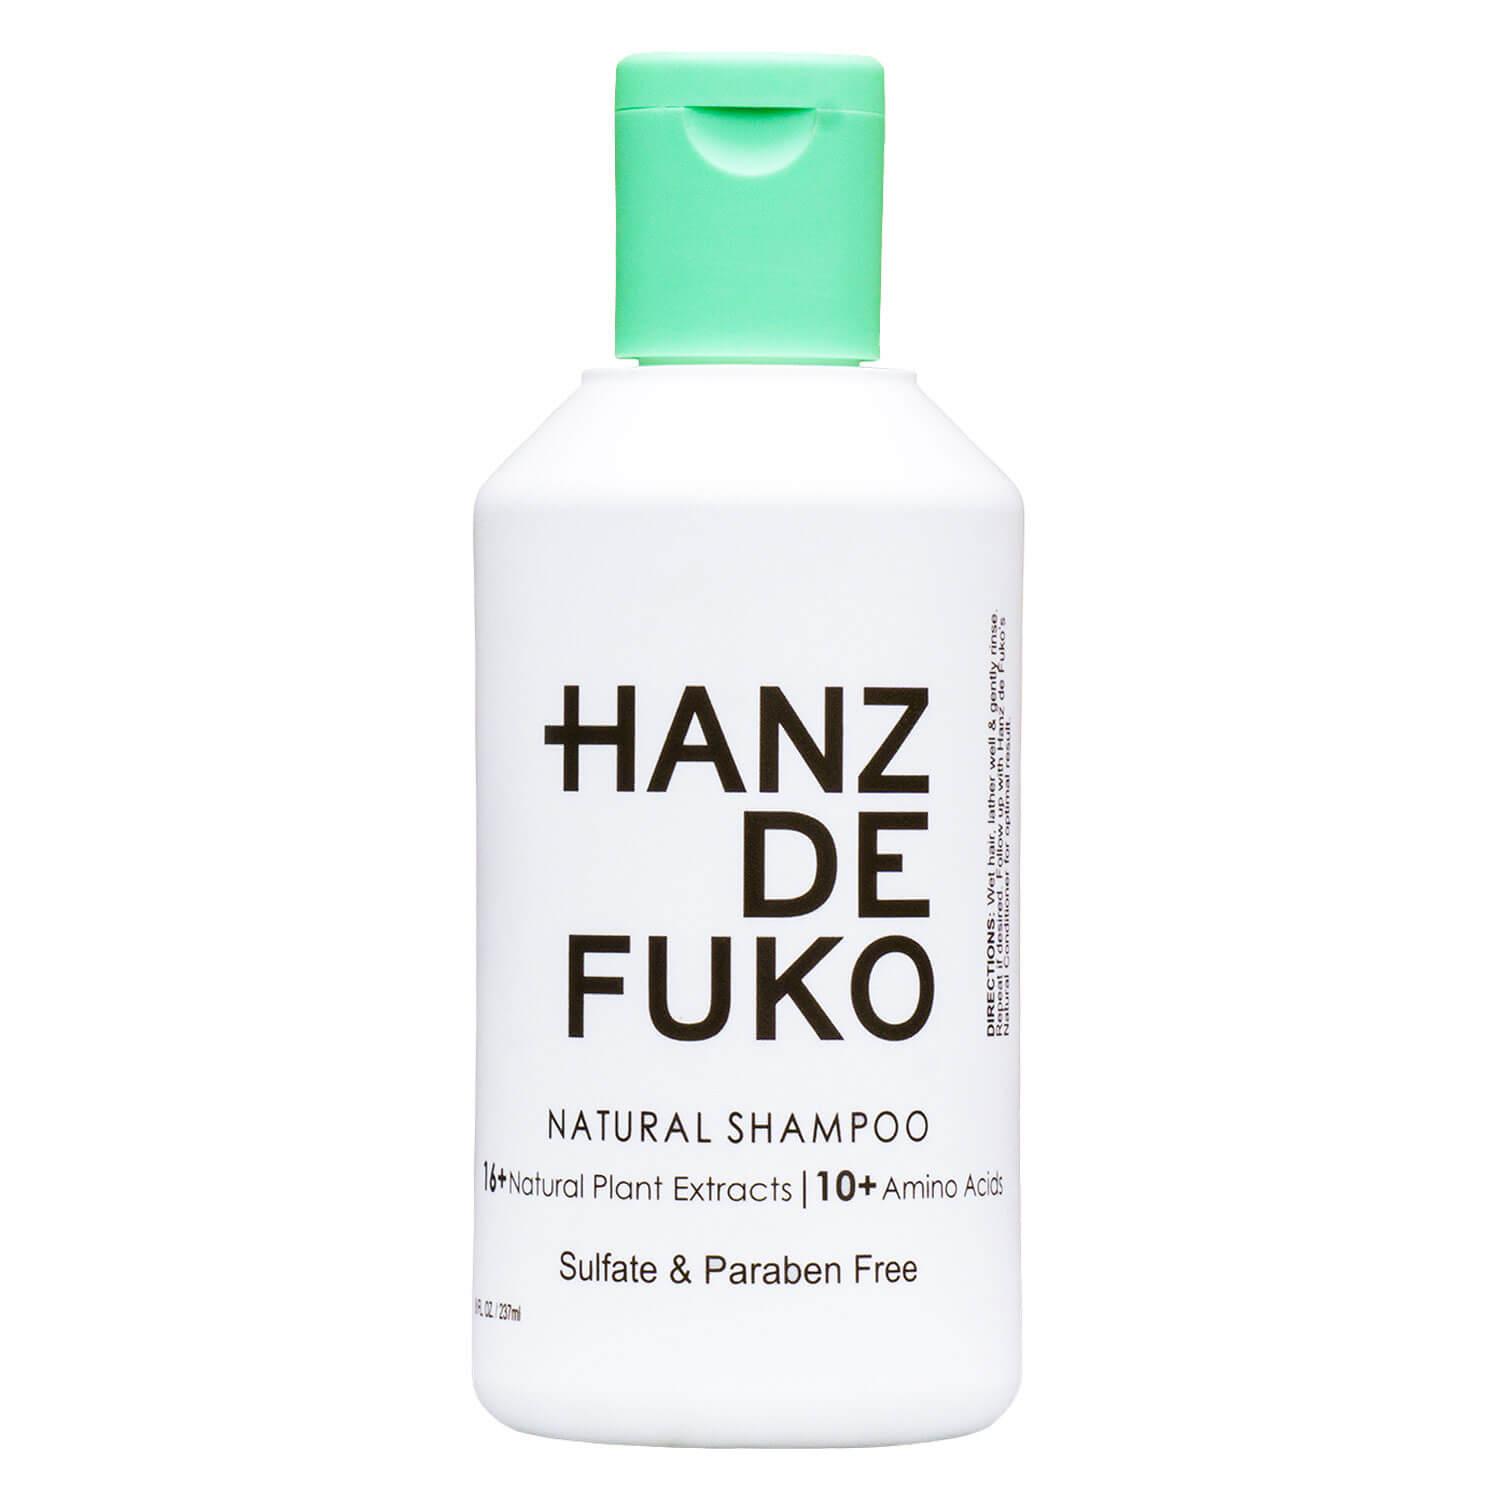 HANZ DE FUKO - Natural Shampoo